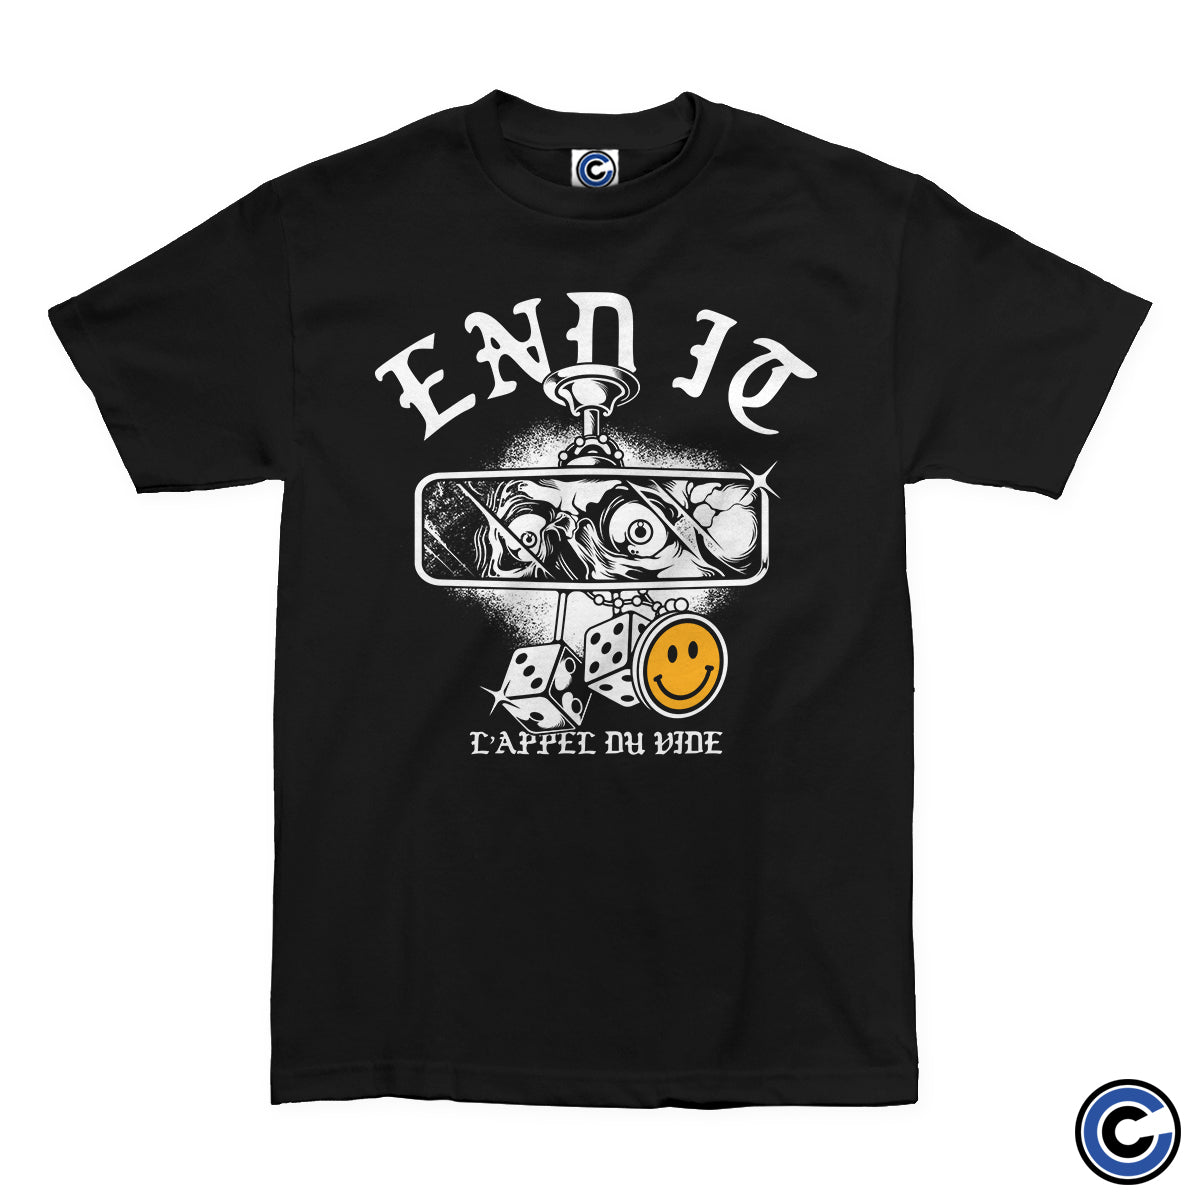 End It "Mirror Smile" Shirt